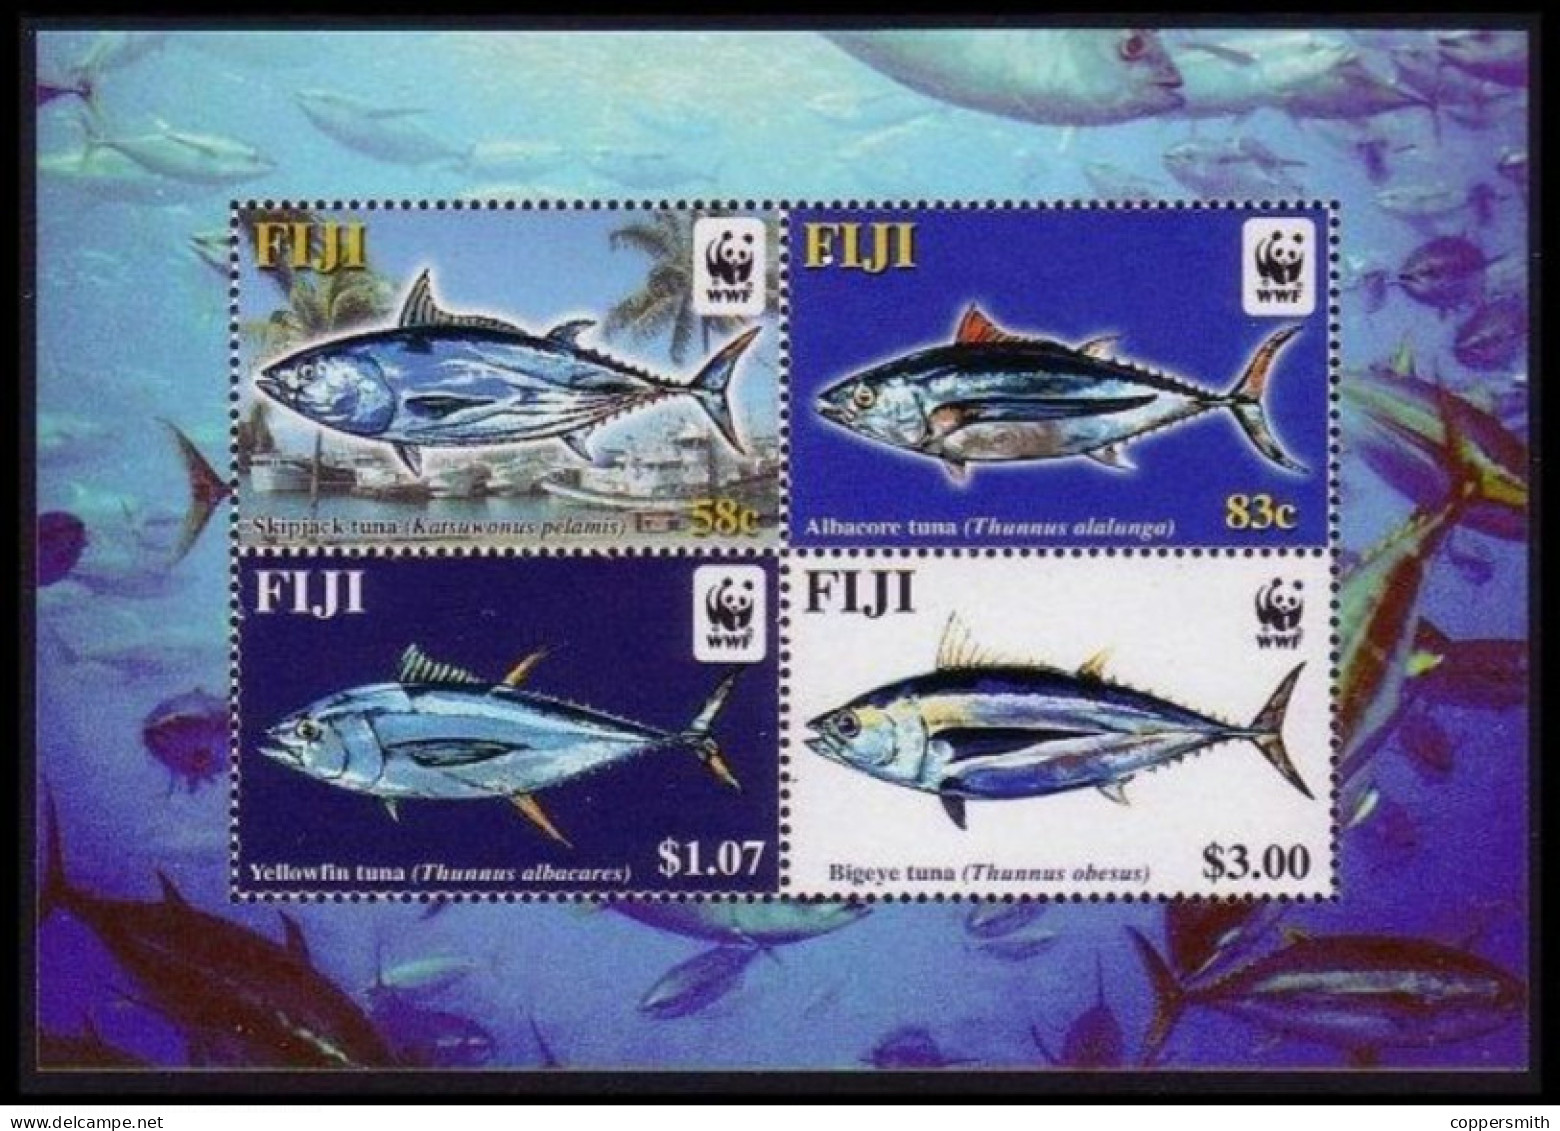 (011) Fiji  WWF  Fish Sheet / Bf / Bloc Poissons / Fische  ** / Mnh  Michel BL 45 - Fiji (1970-...)